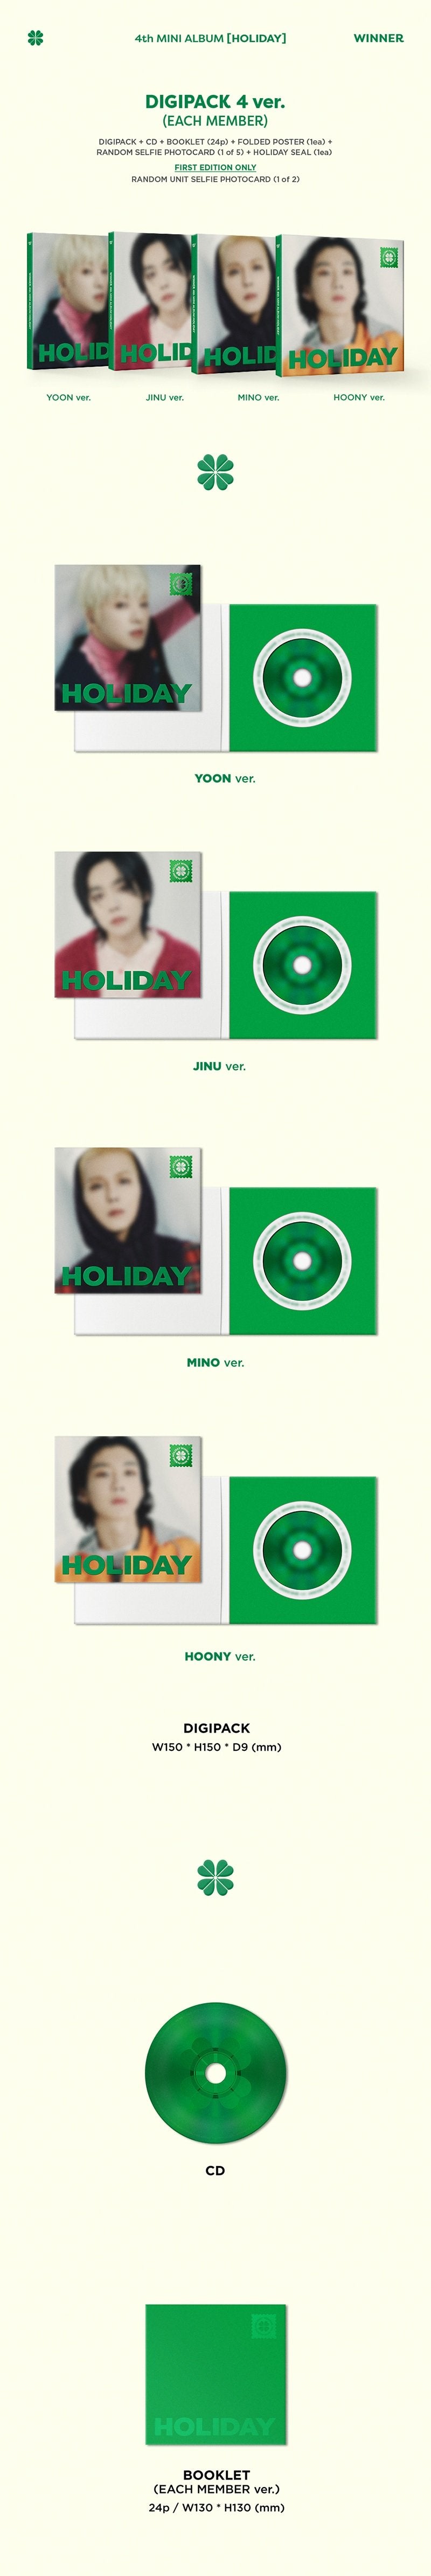 Ganador - Holiday 4th Mini Álbum (Digipack Ver.)